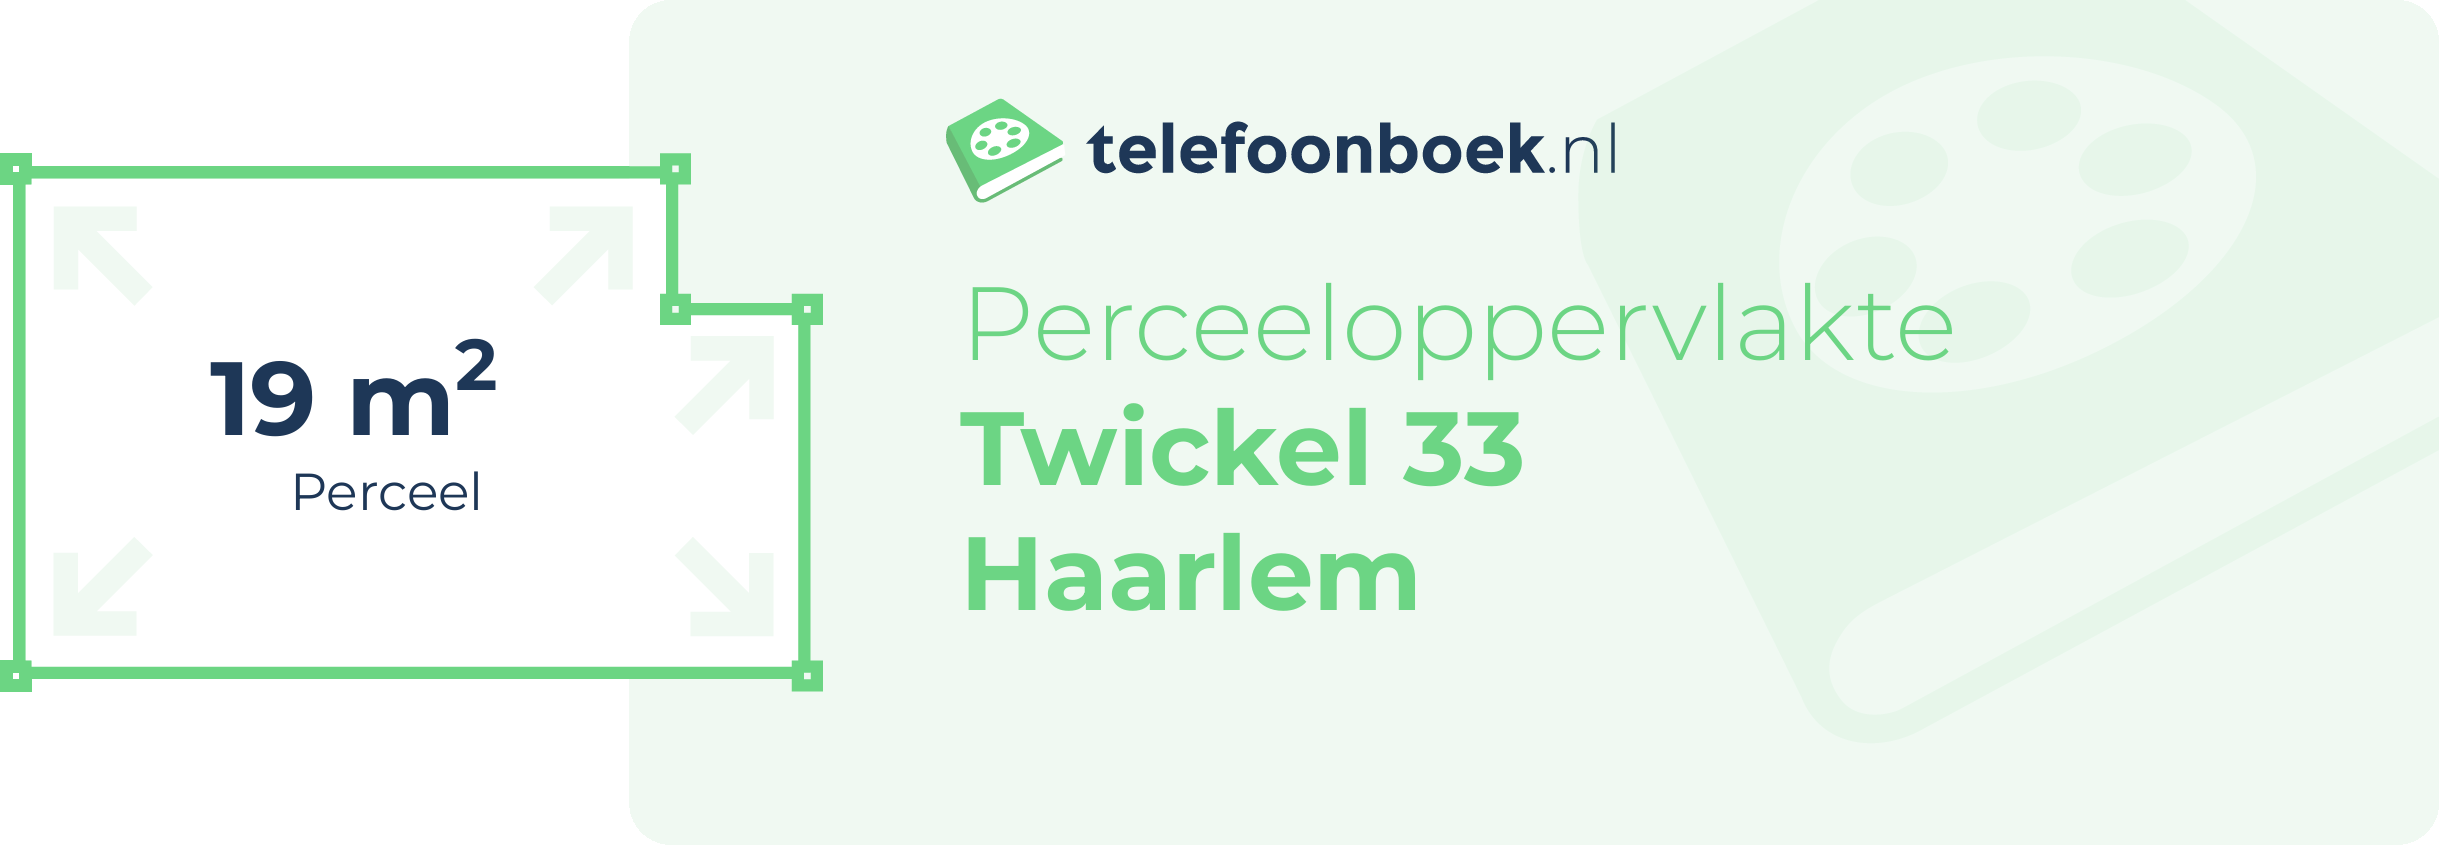 Perceeloppervlakte Twickel 33 Haarlem